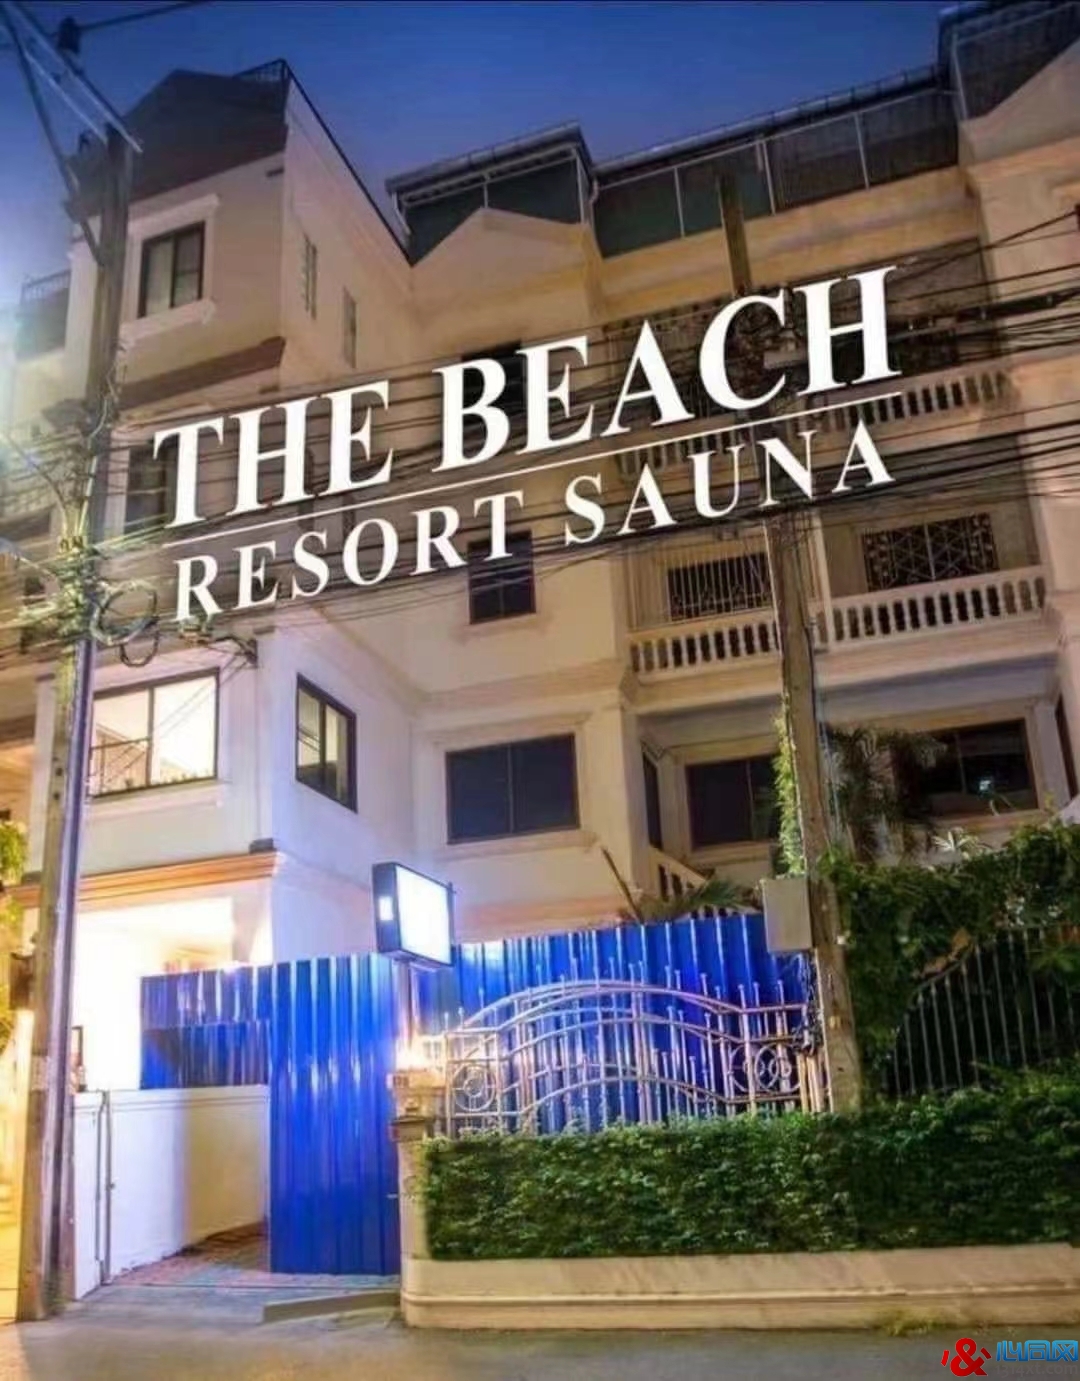 The Beach Resort Sauna